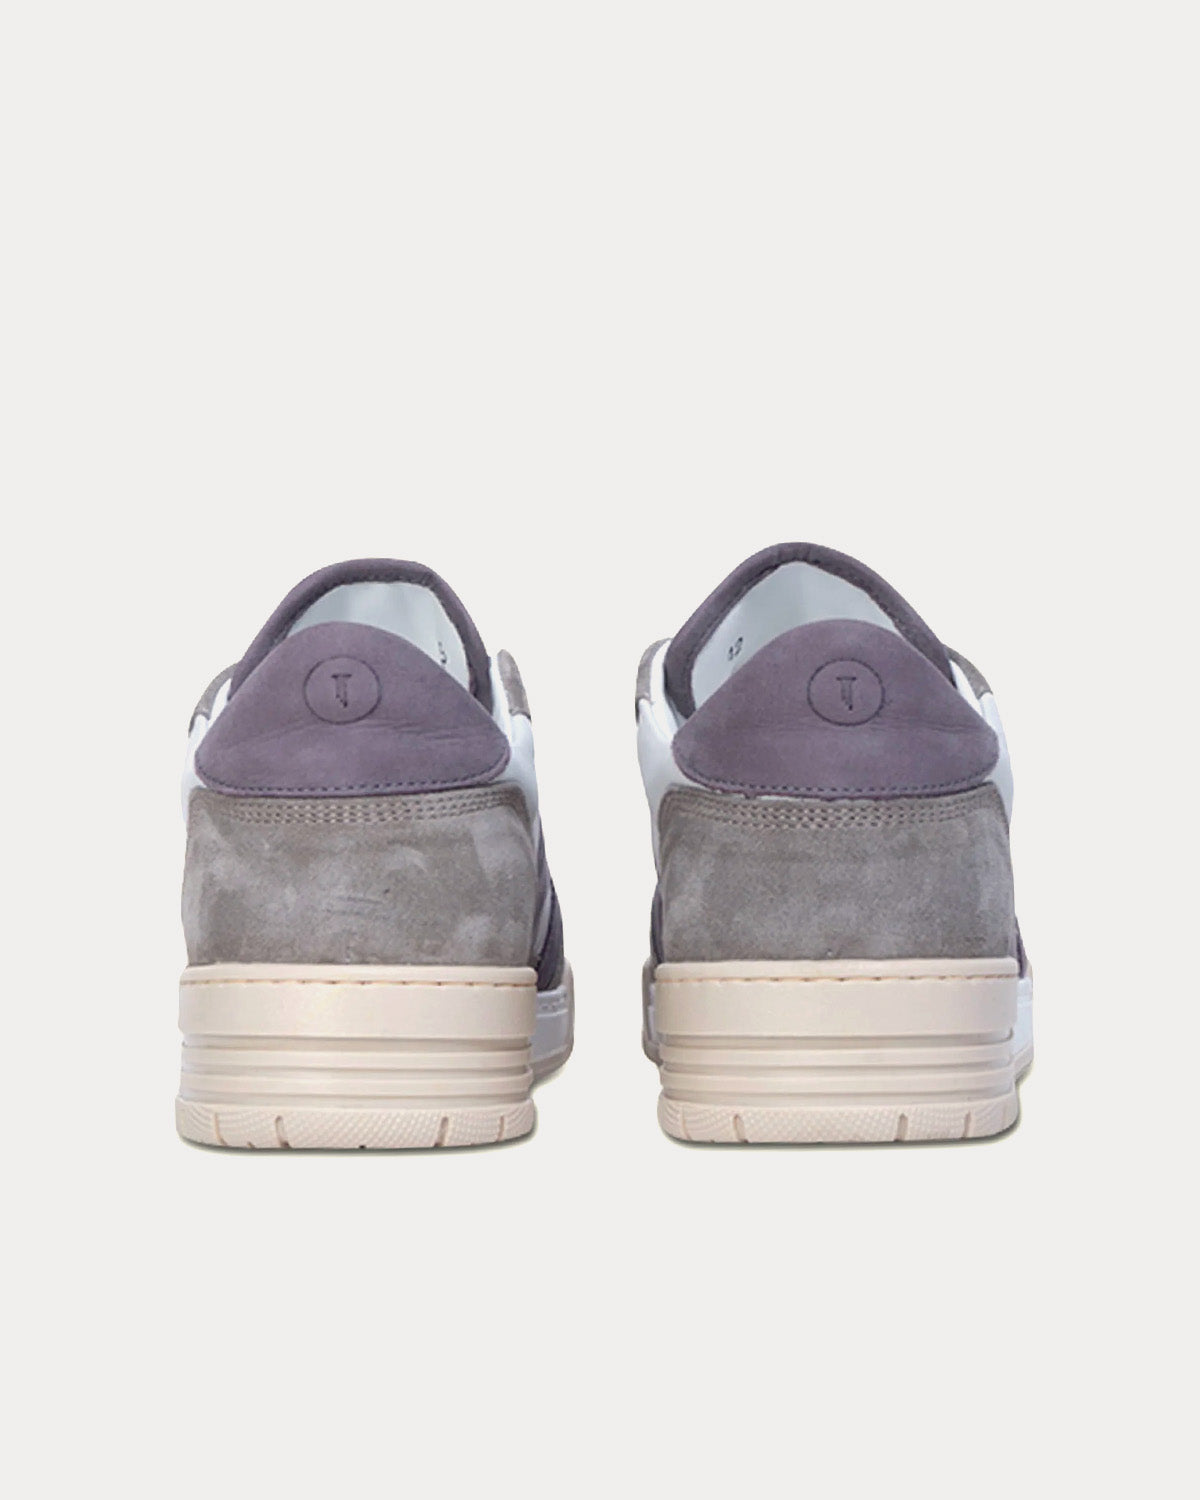 Collegium - Pillar Destroyer II 'Devastator' Grey / Violet / White Low Top Sneakers